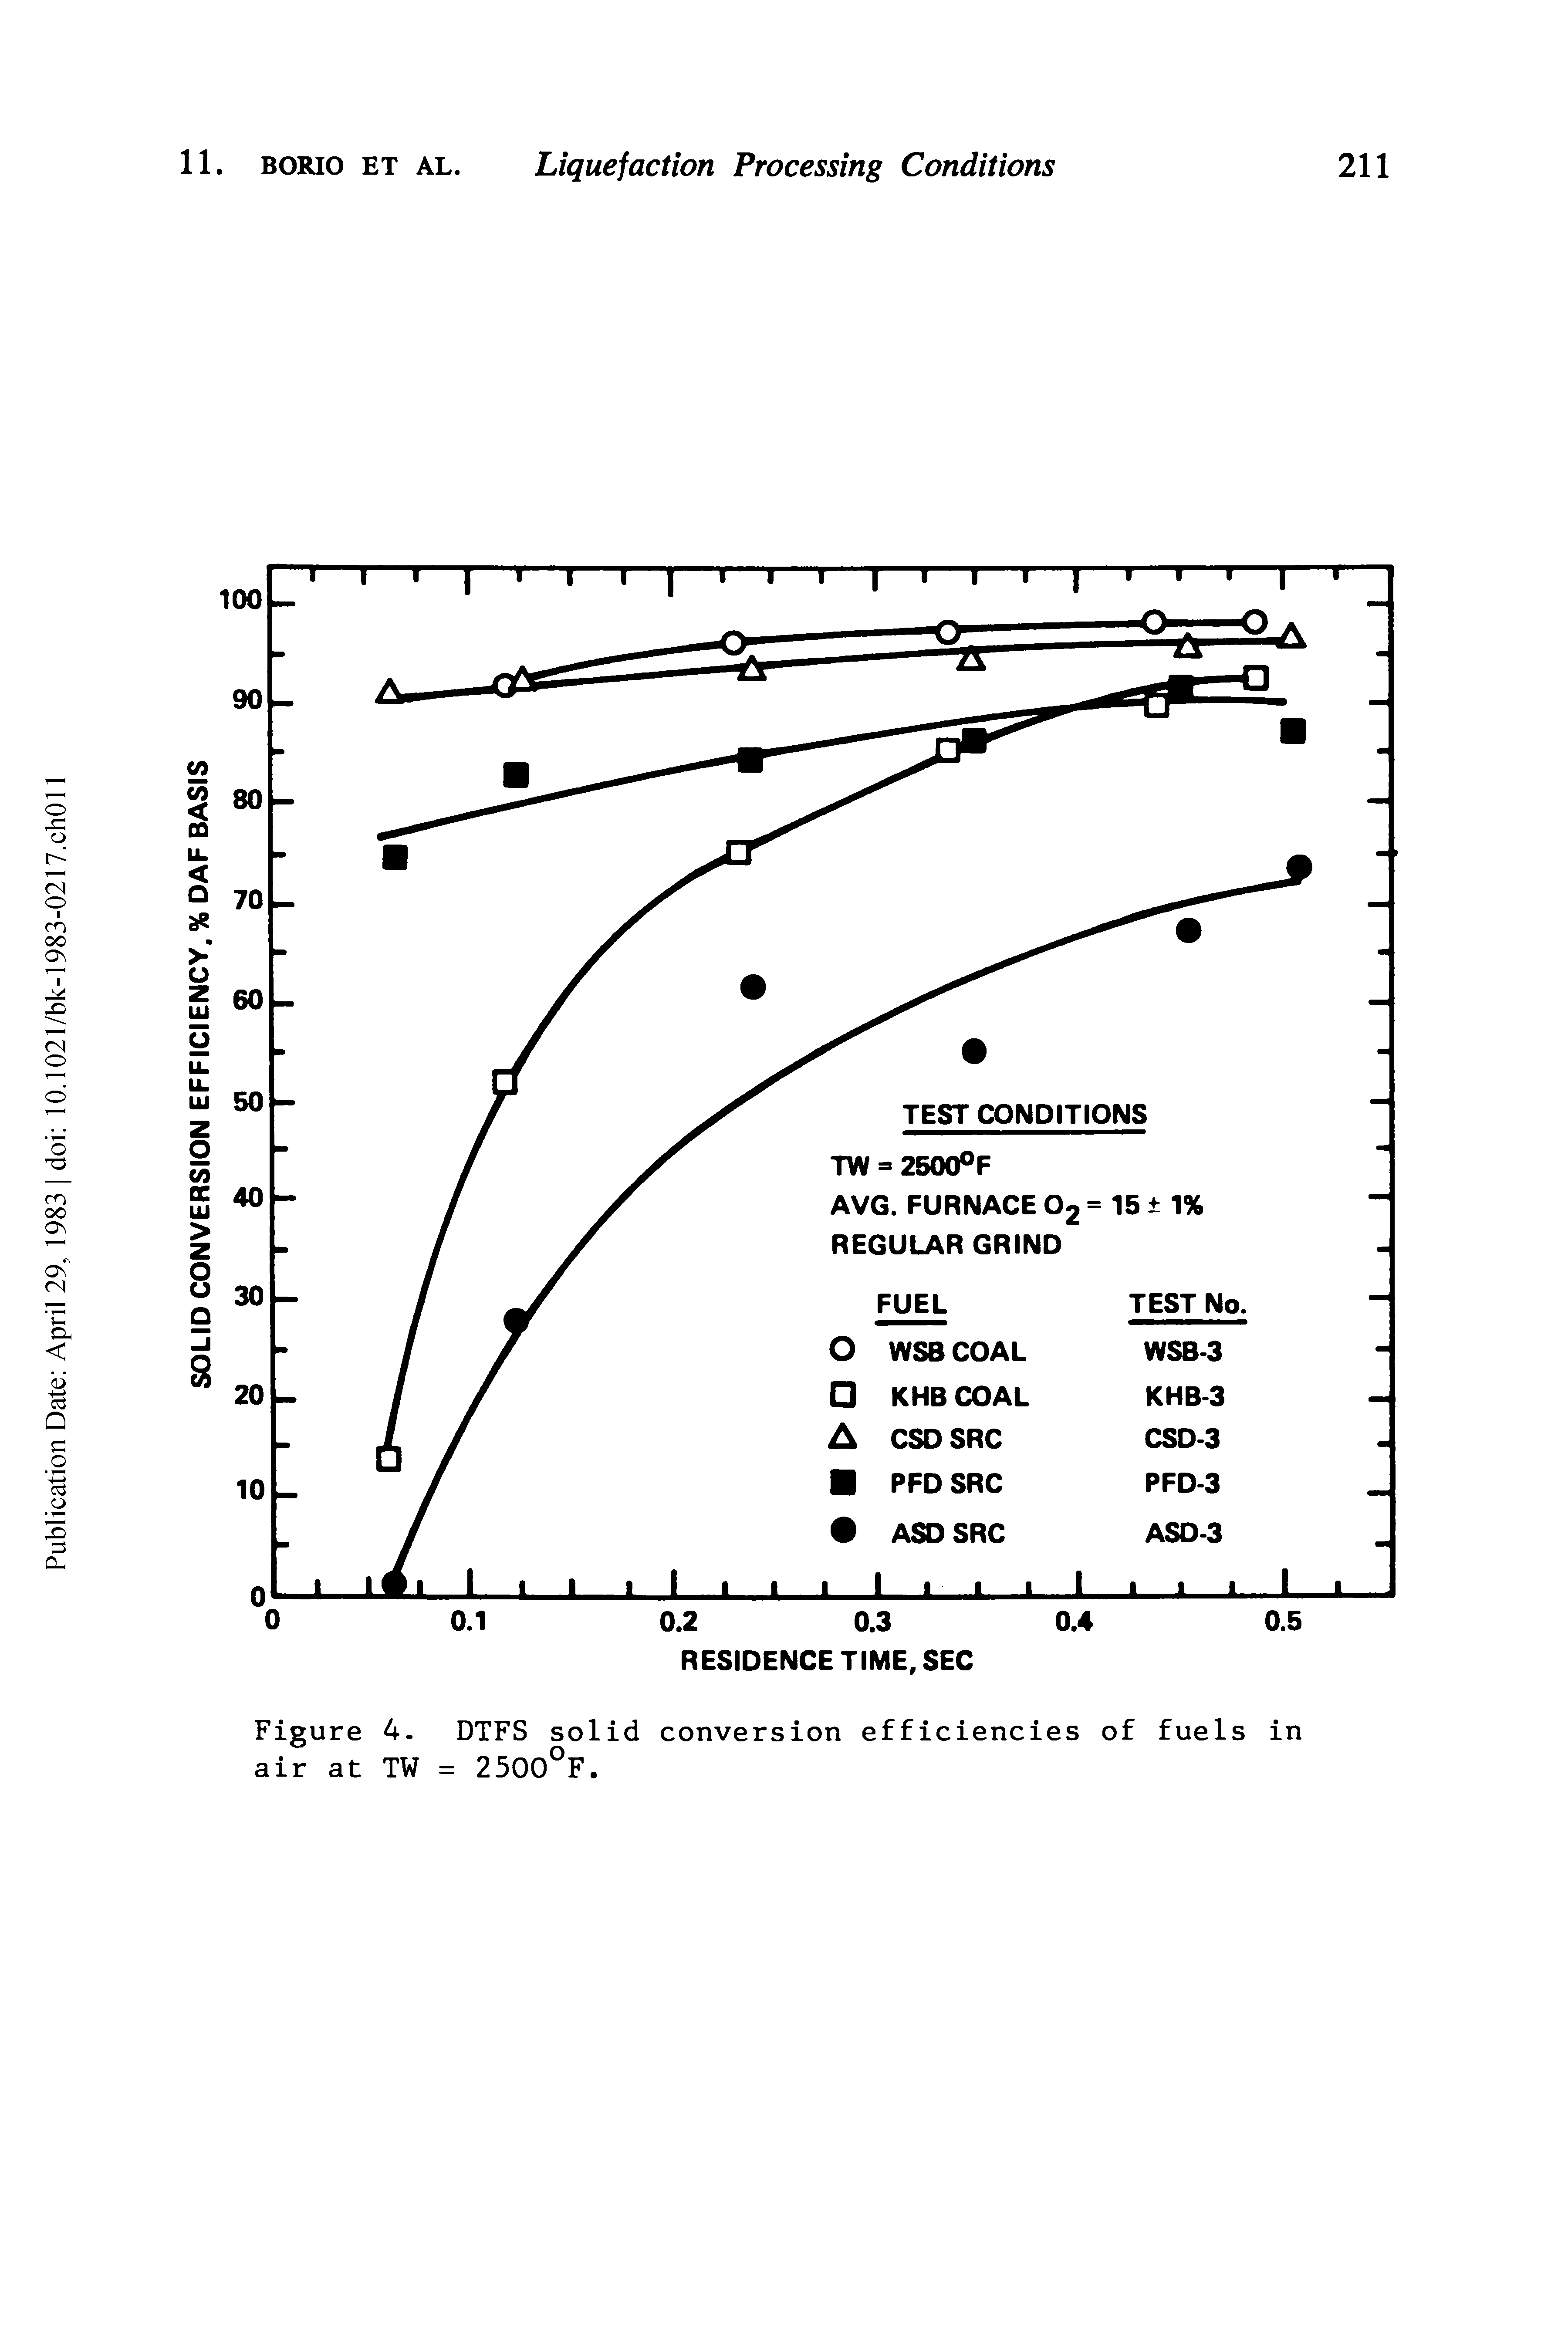 Figure 4. DTFS solid conversion efficiencies of fuels in air at TW = 2500°F.